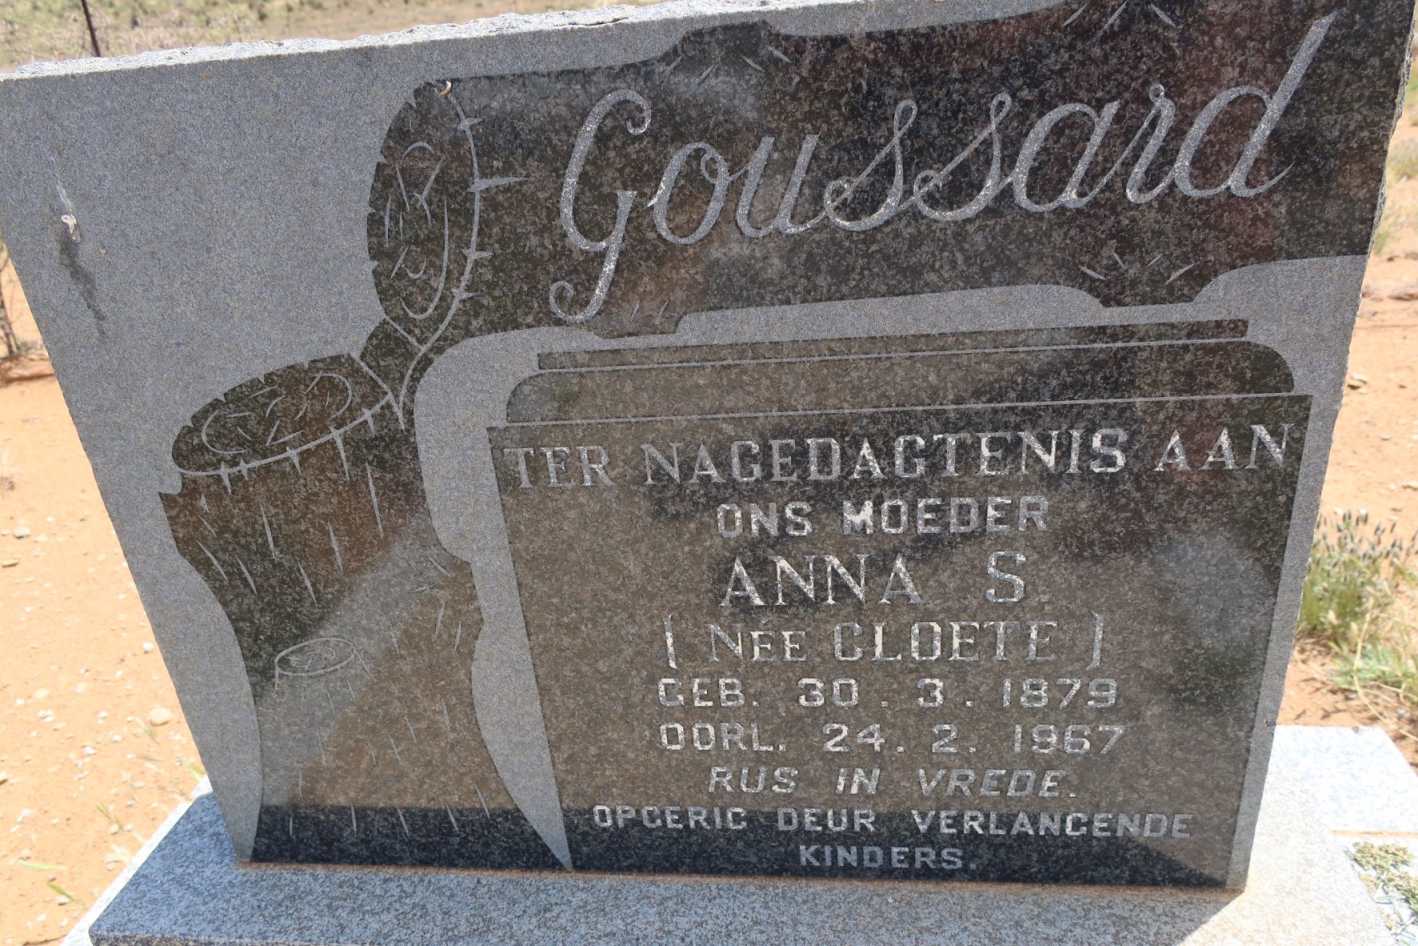 GOUSSARD Anna S. nee CLOETE 1879-1967